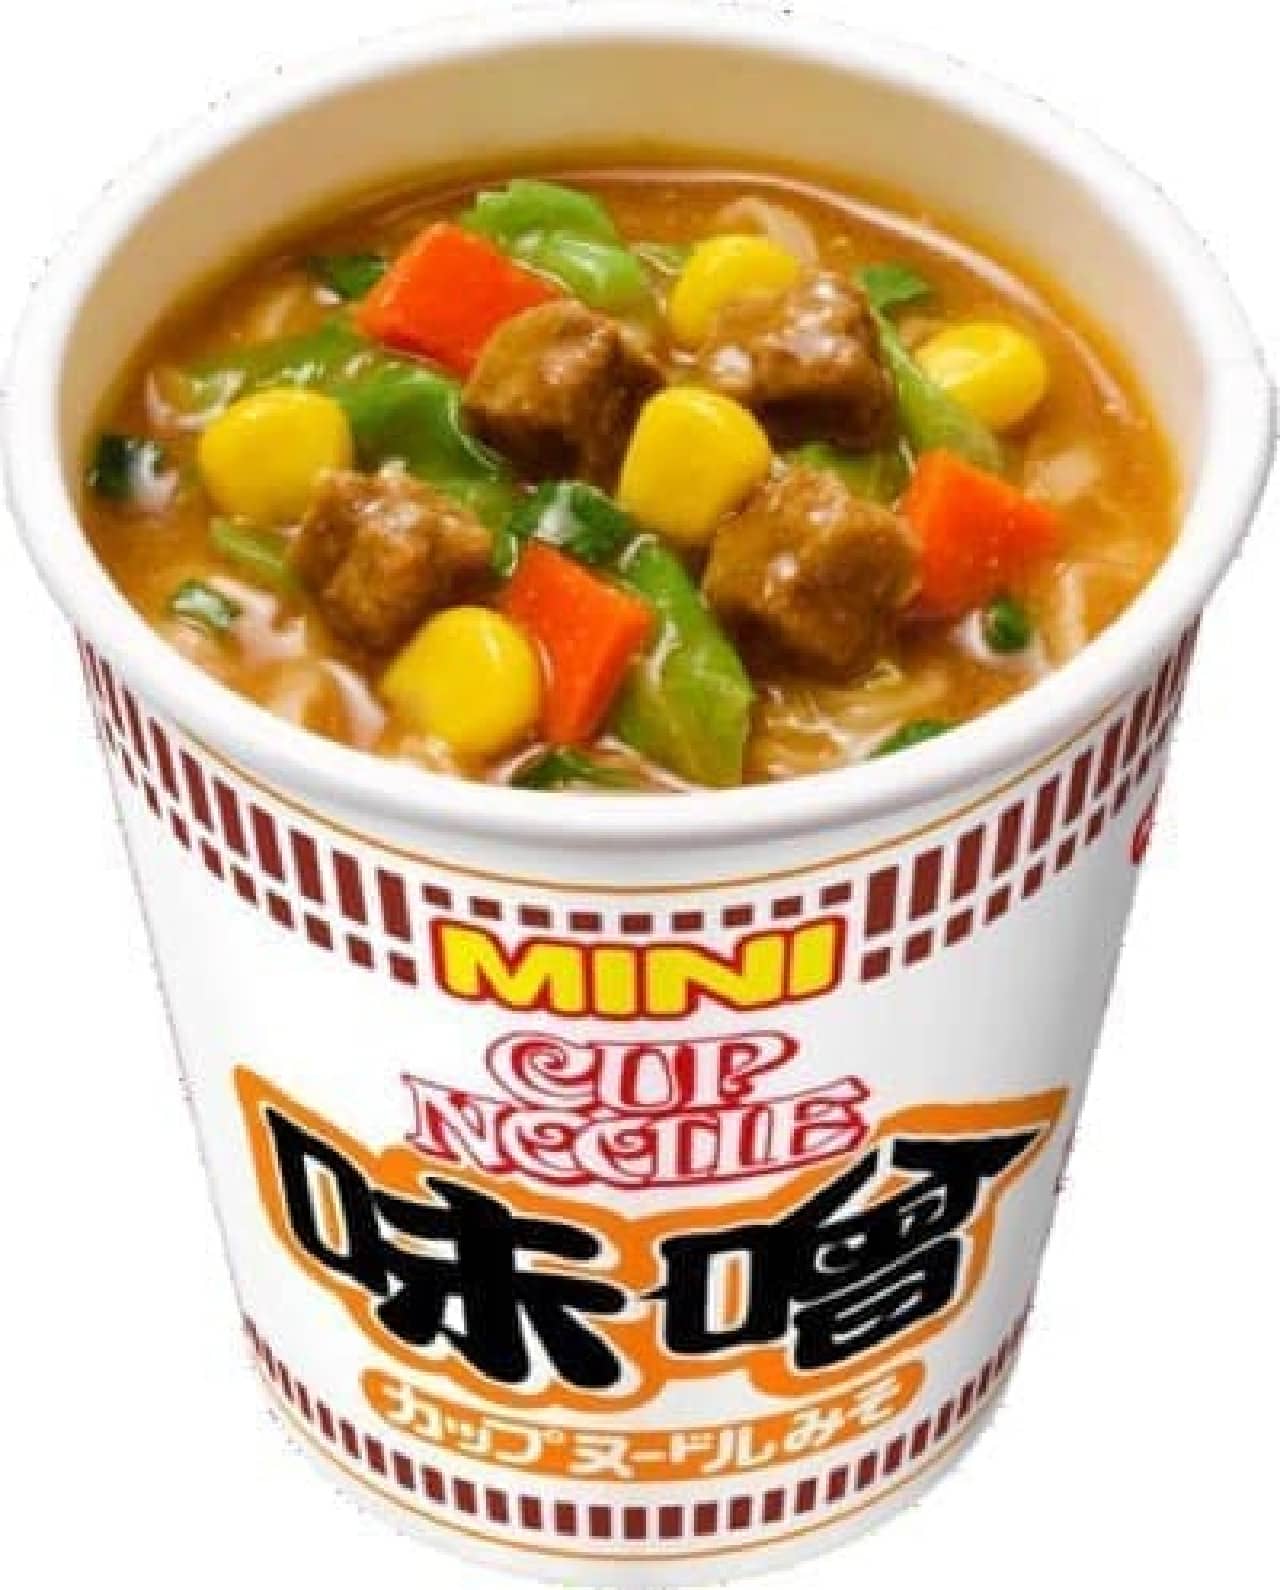 Nissin Foods "Cup Noodle Miso Mini"